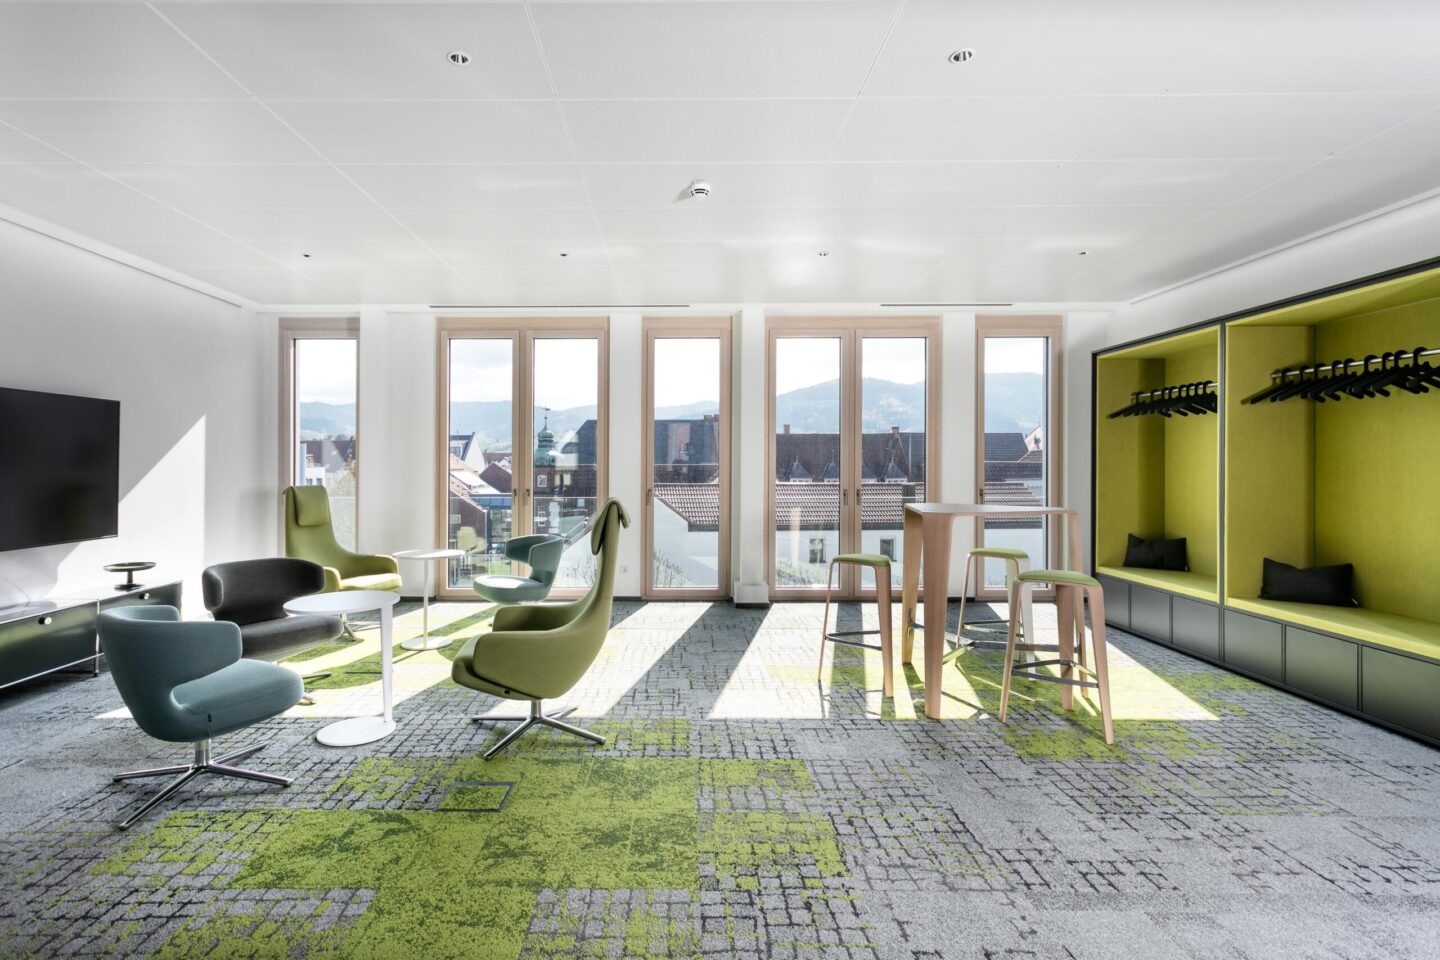 Sparkasse Bühl – Main Office │ modern meeting rooms │ various communication areas